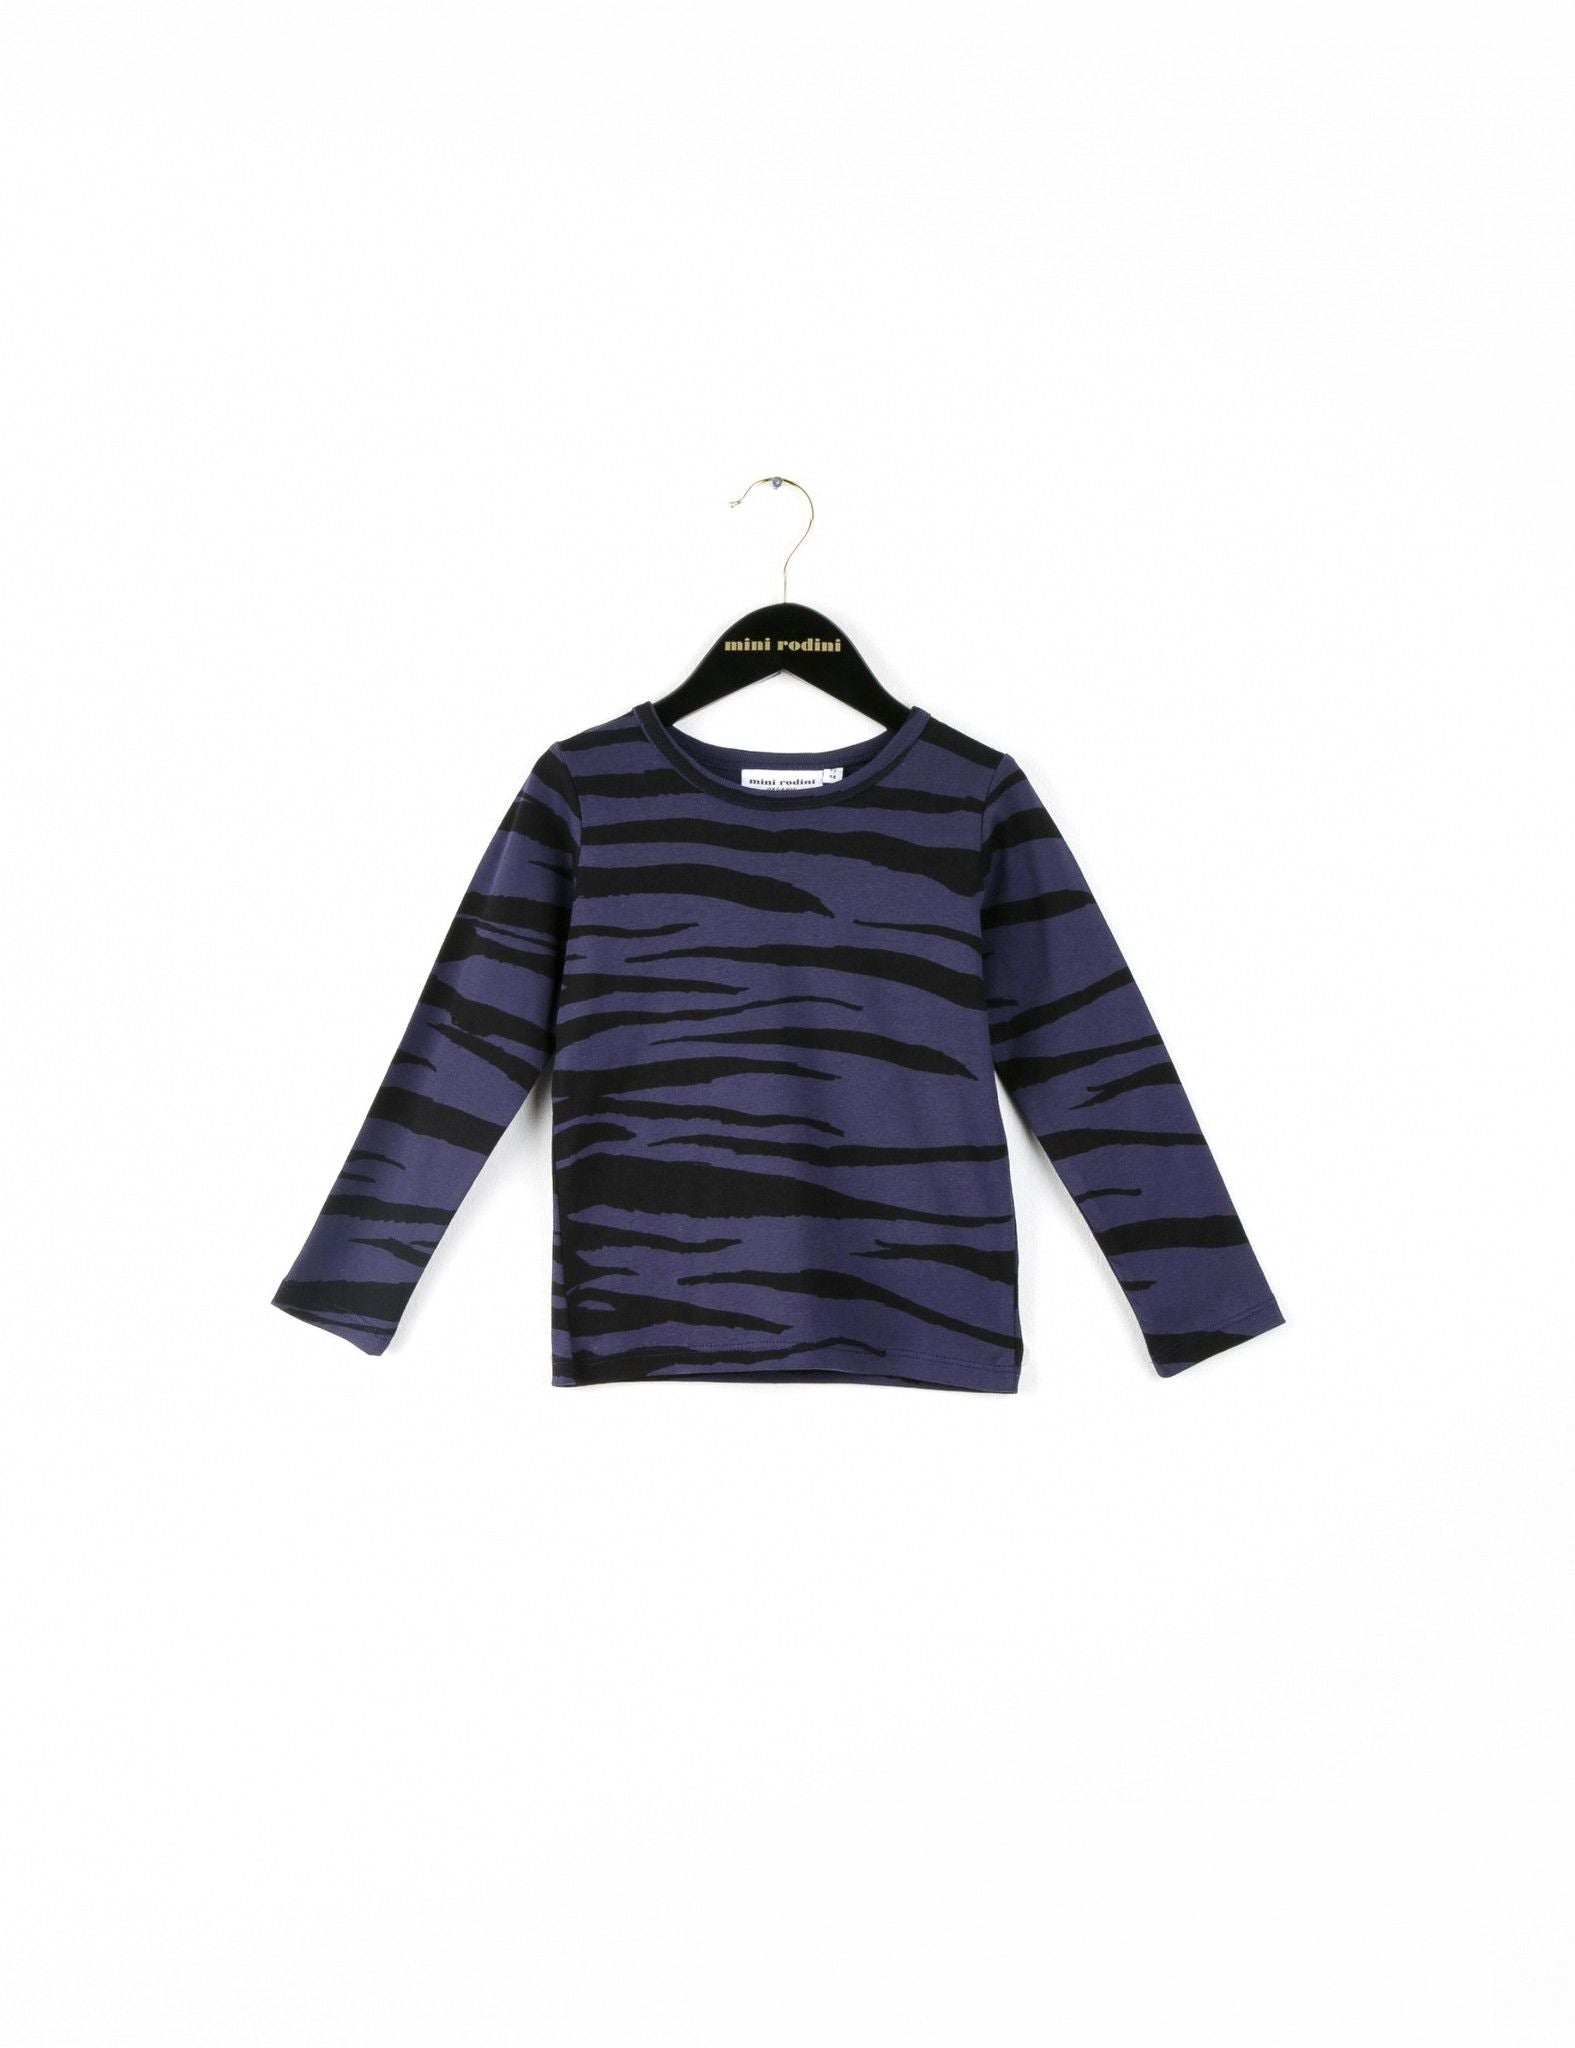 Tiger Dk Blue Stripes Long Sleeve T-Shirt - CÉMAROSE | Children's Fashion Store - 1